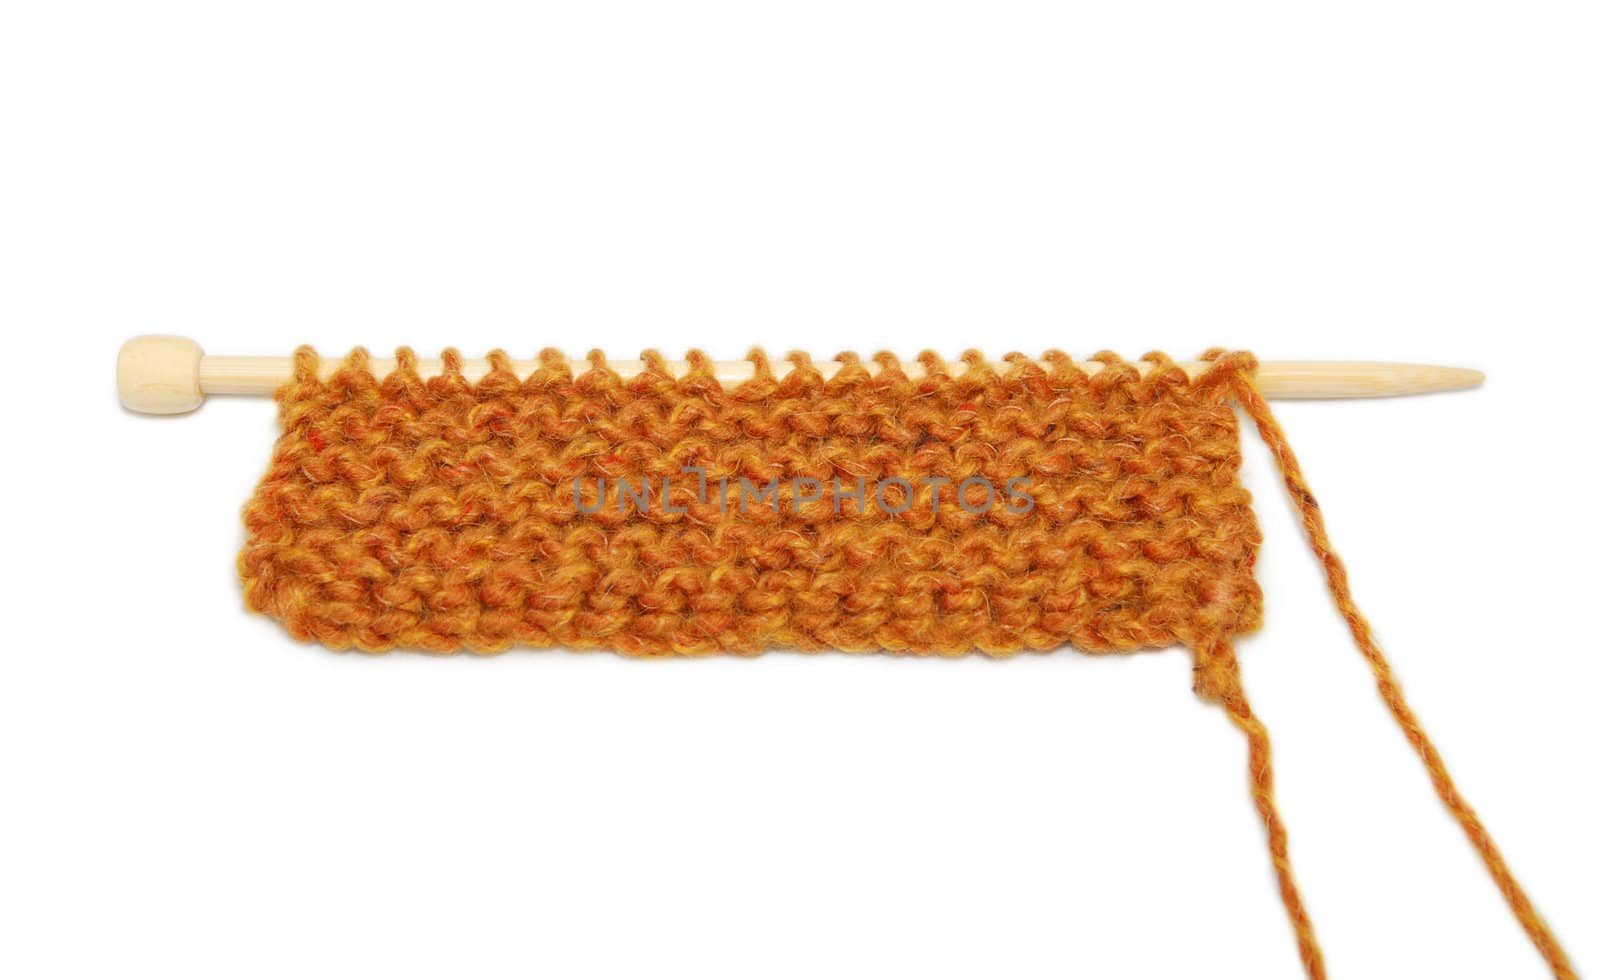 Short length of garter stitch knitting on one needle, isolated on a white background